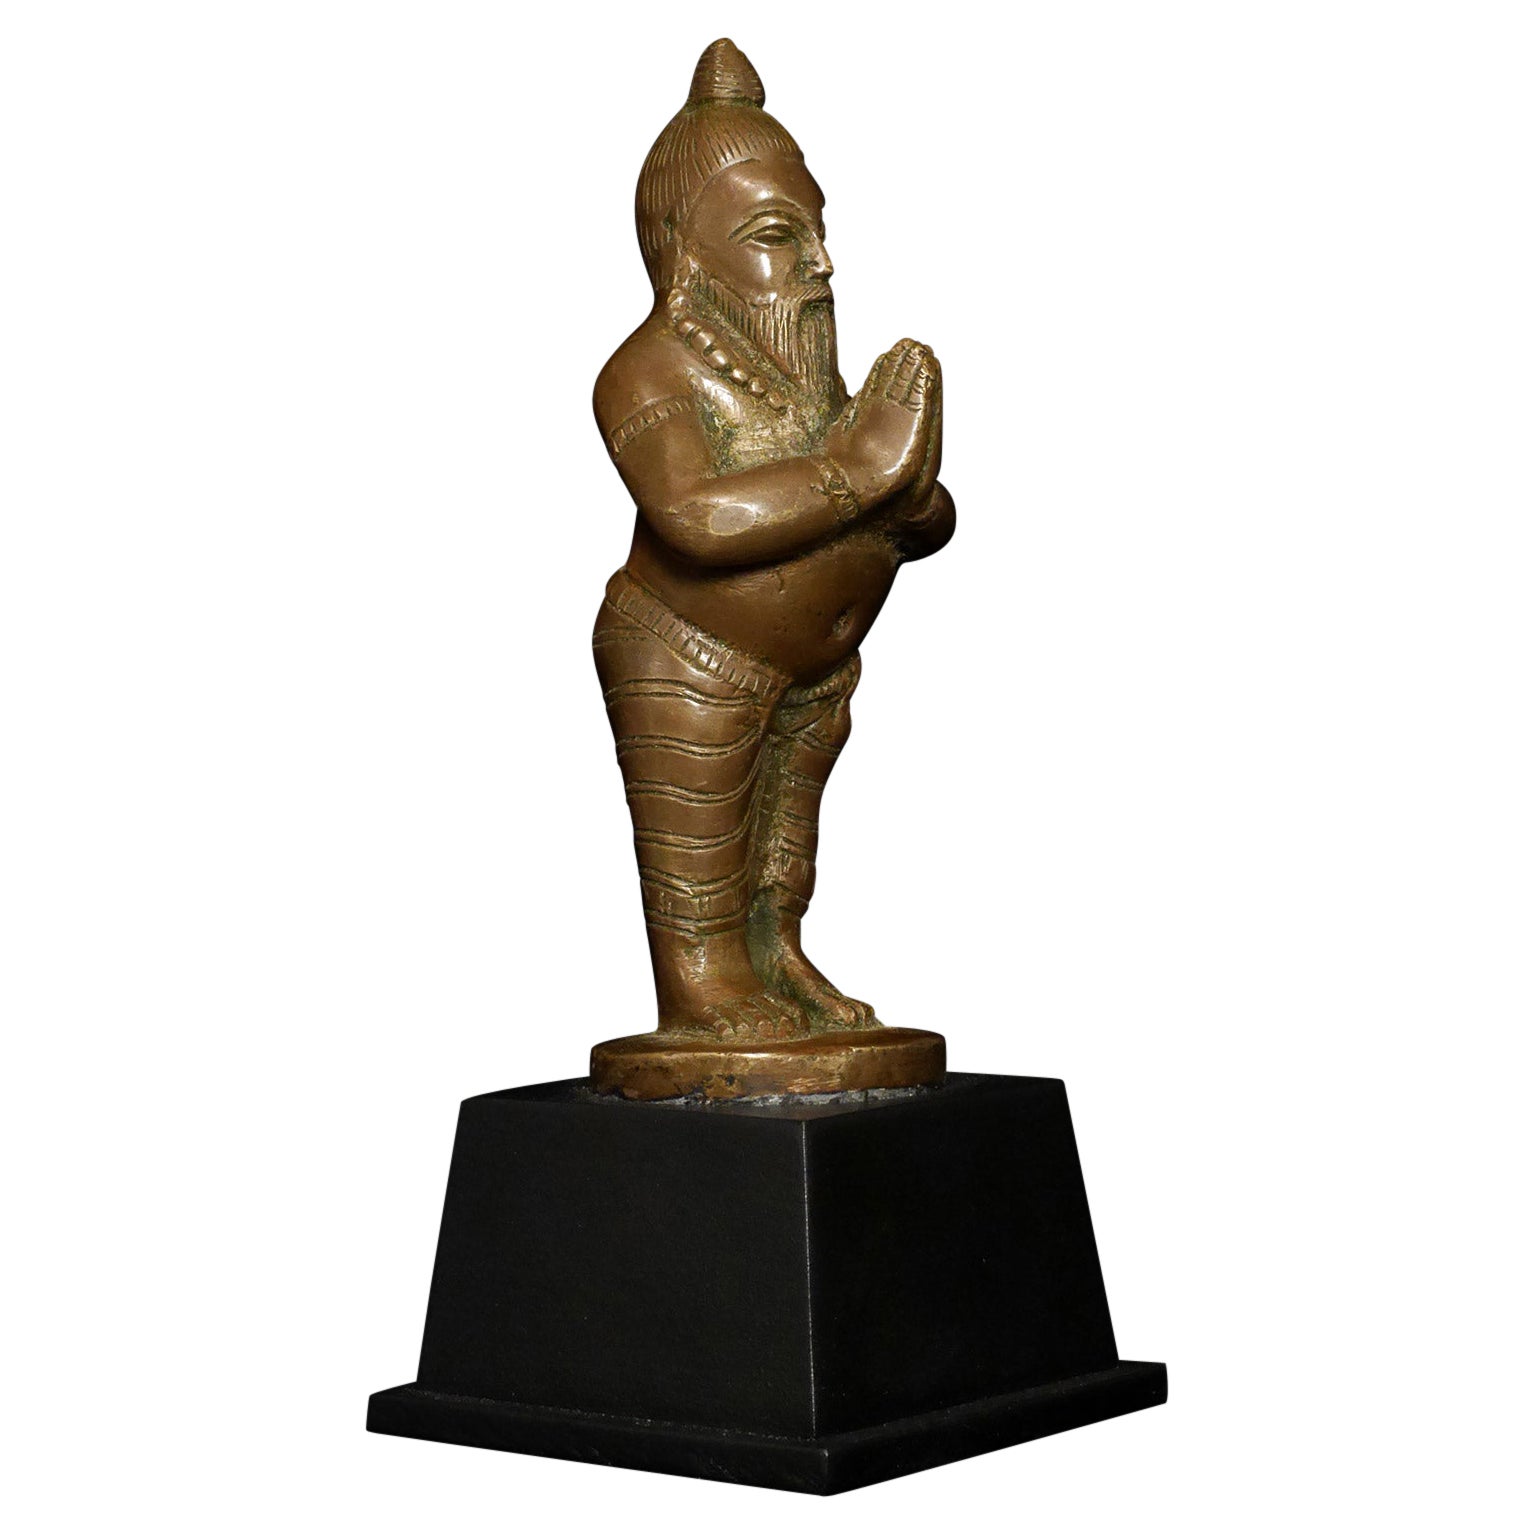 Antique Bronze Indian Yogi, Unique Solid-Cast Hindu Sculpture - 7816